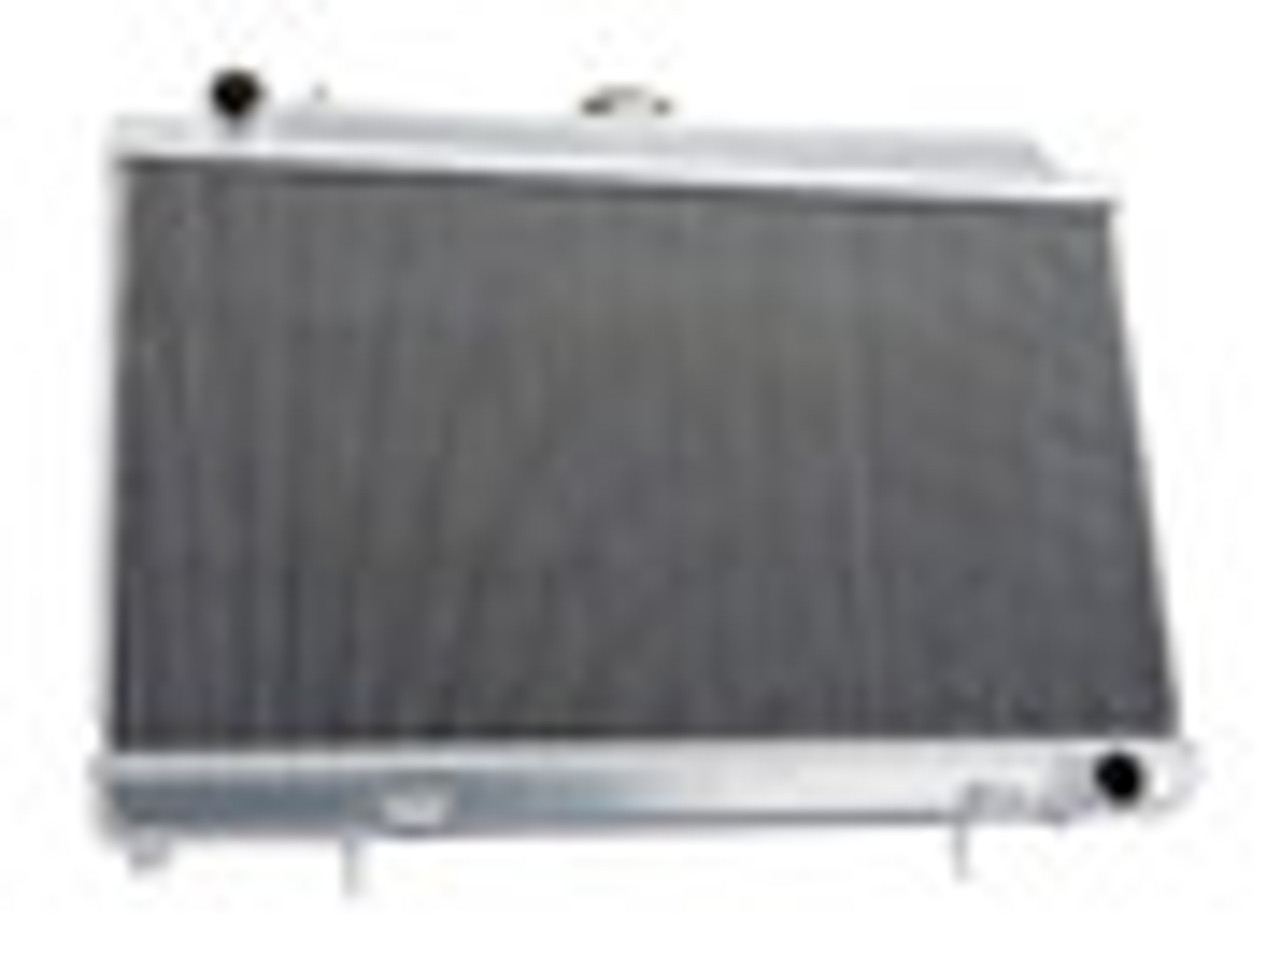 ISR Aluminum Radiator for your Nissan 240sx 89-94 w/ SR20DET. High quality aluminum. 
1x Radiator